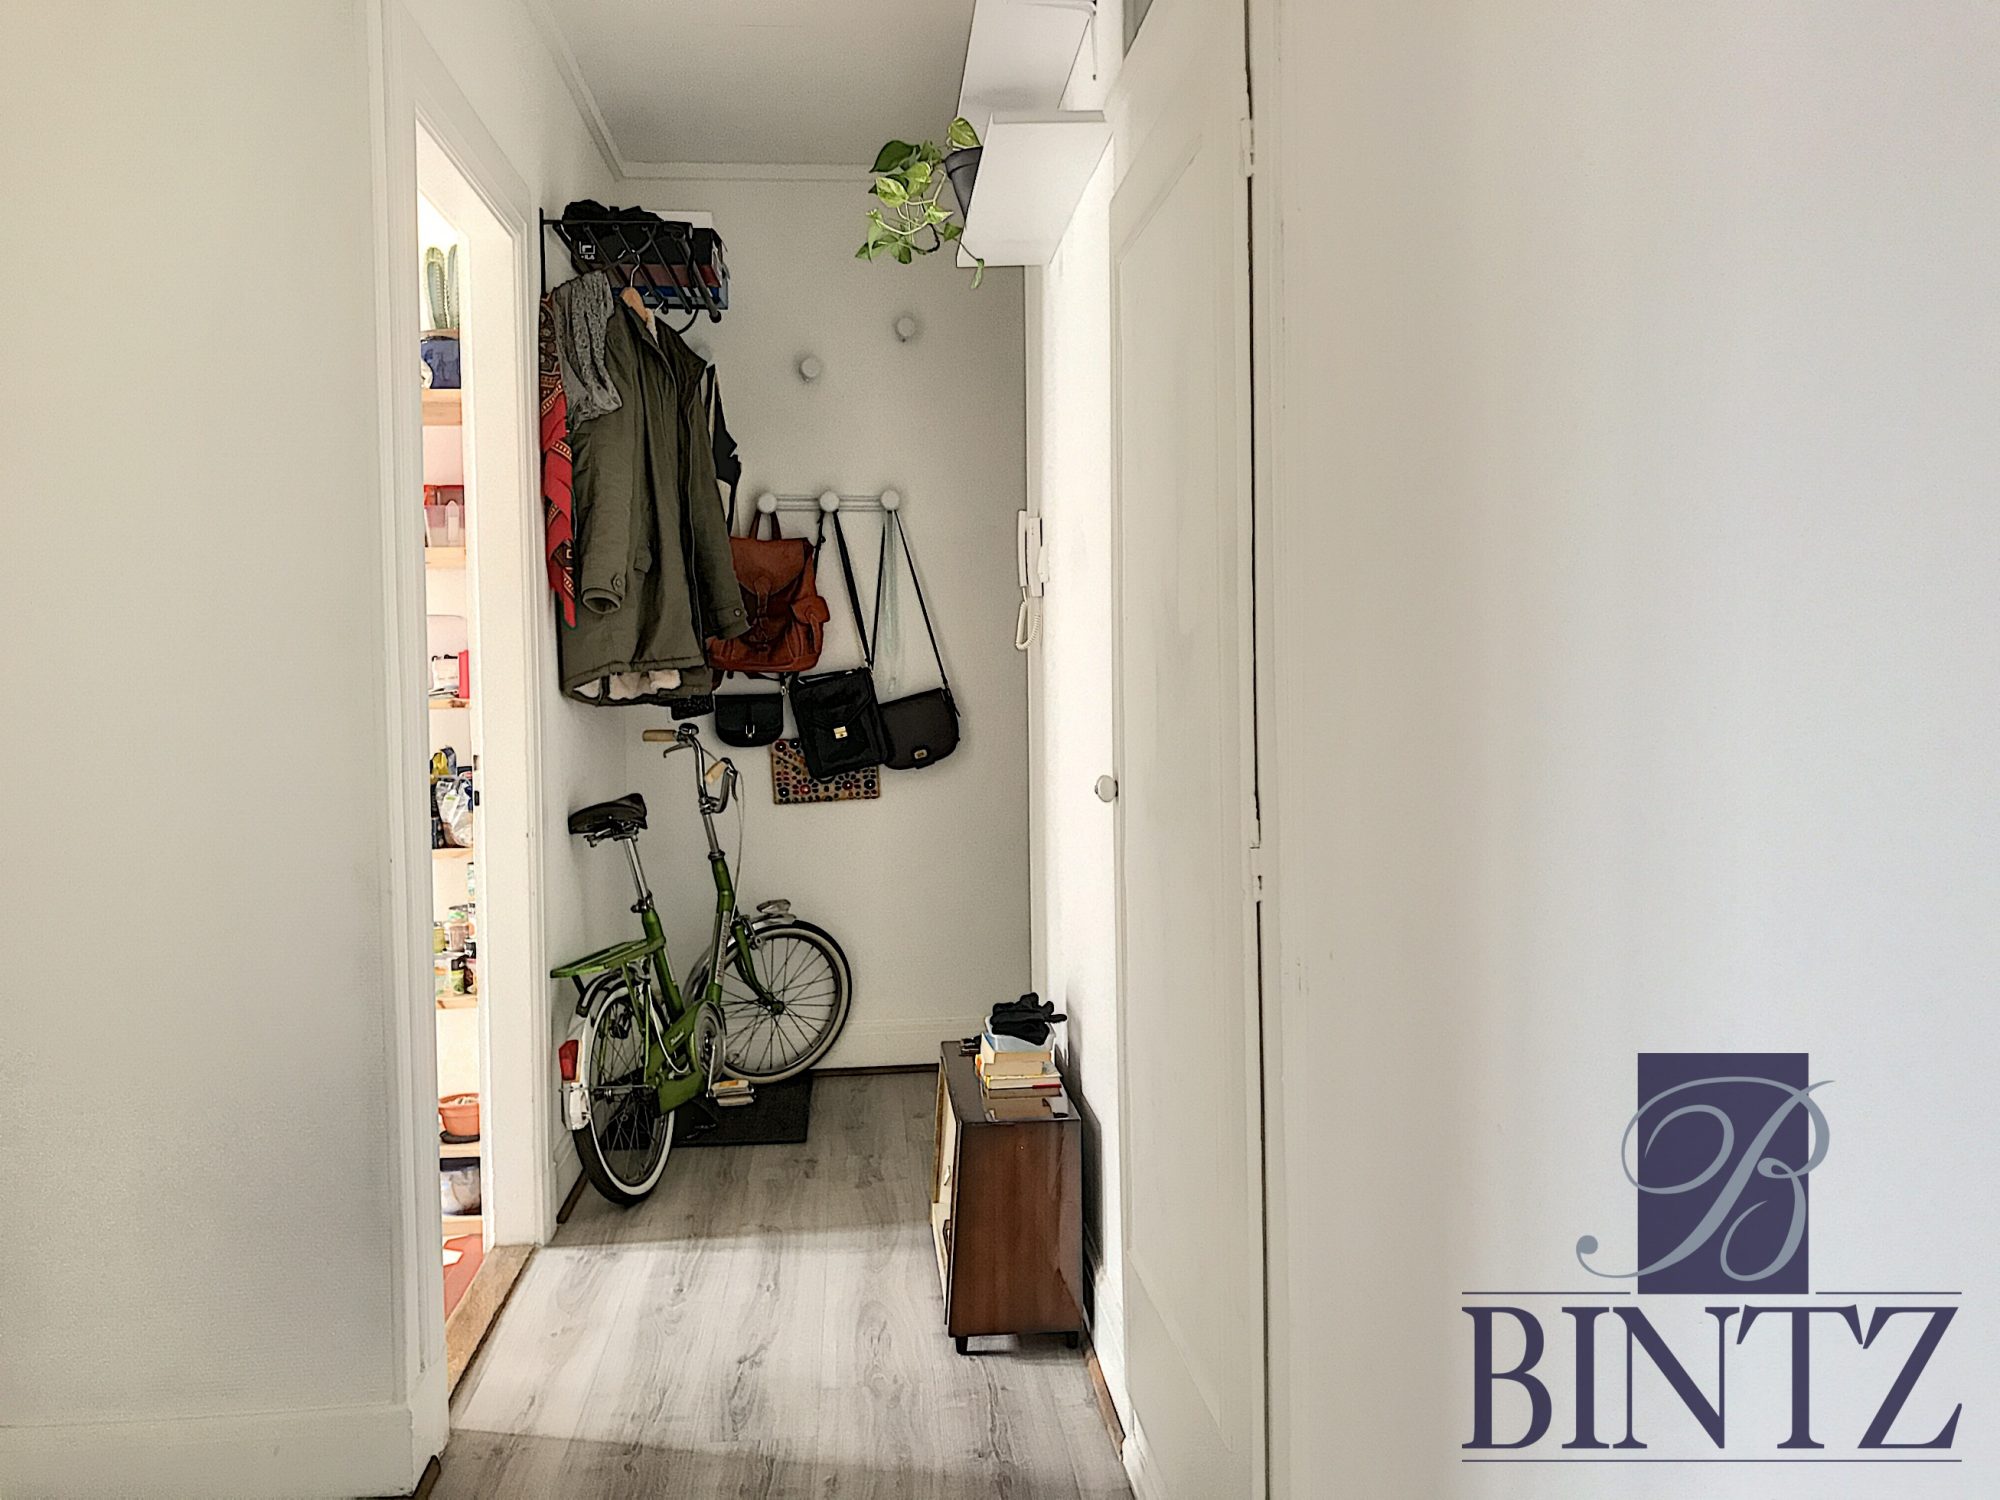 1 PIÈCE QUARTIER KRUTENAU - location appartement Strasbourg - Bintz Immobilier - 6